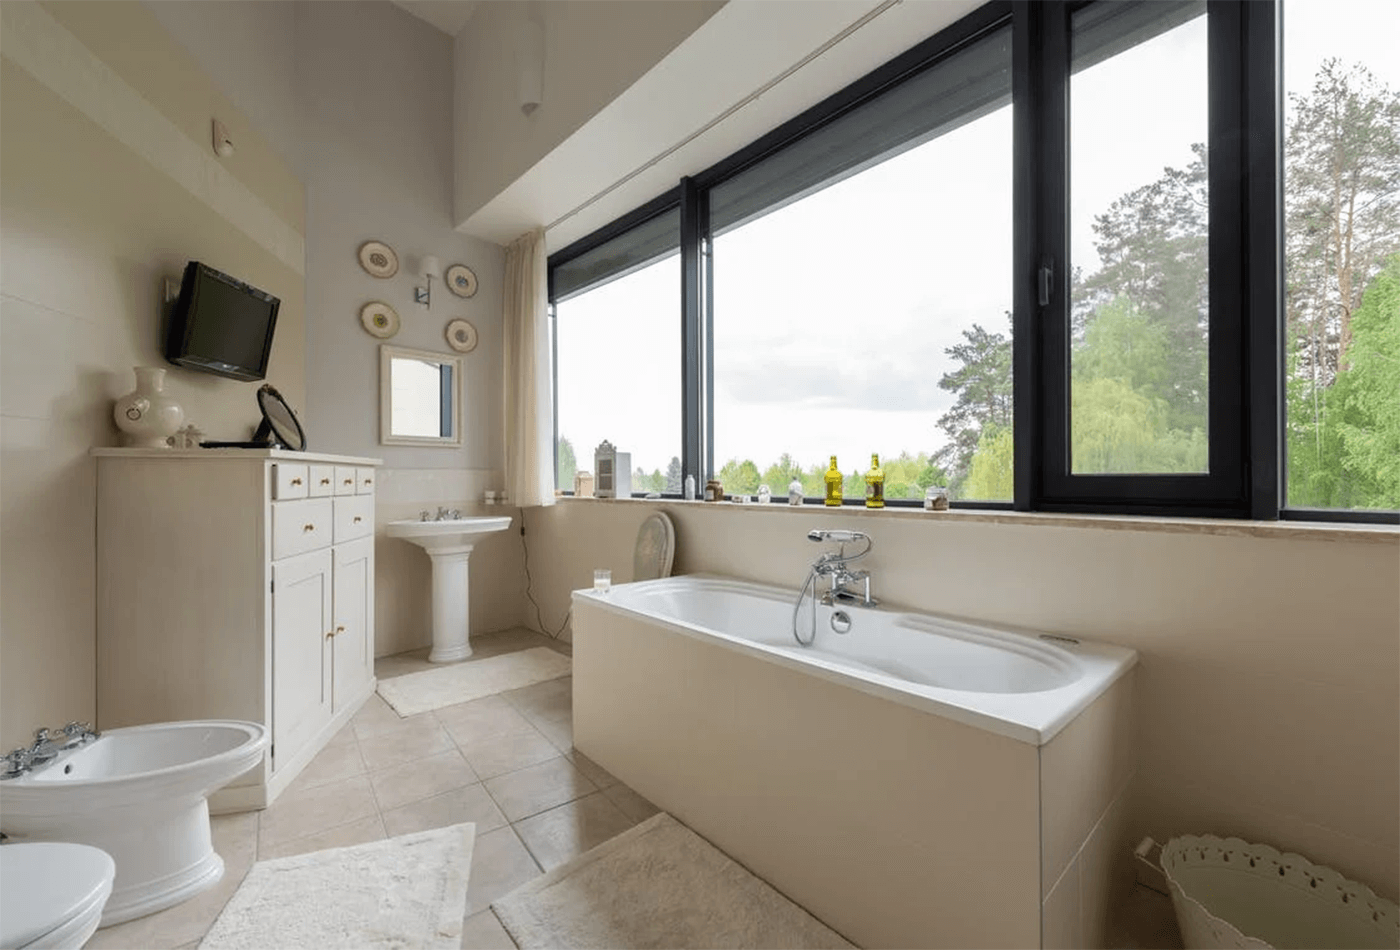 Bathroom Design And Installation